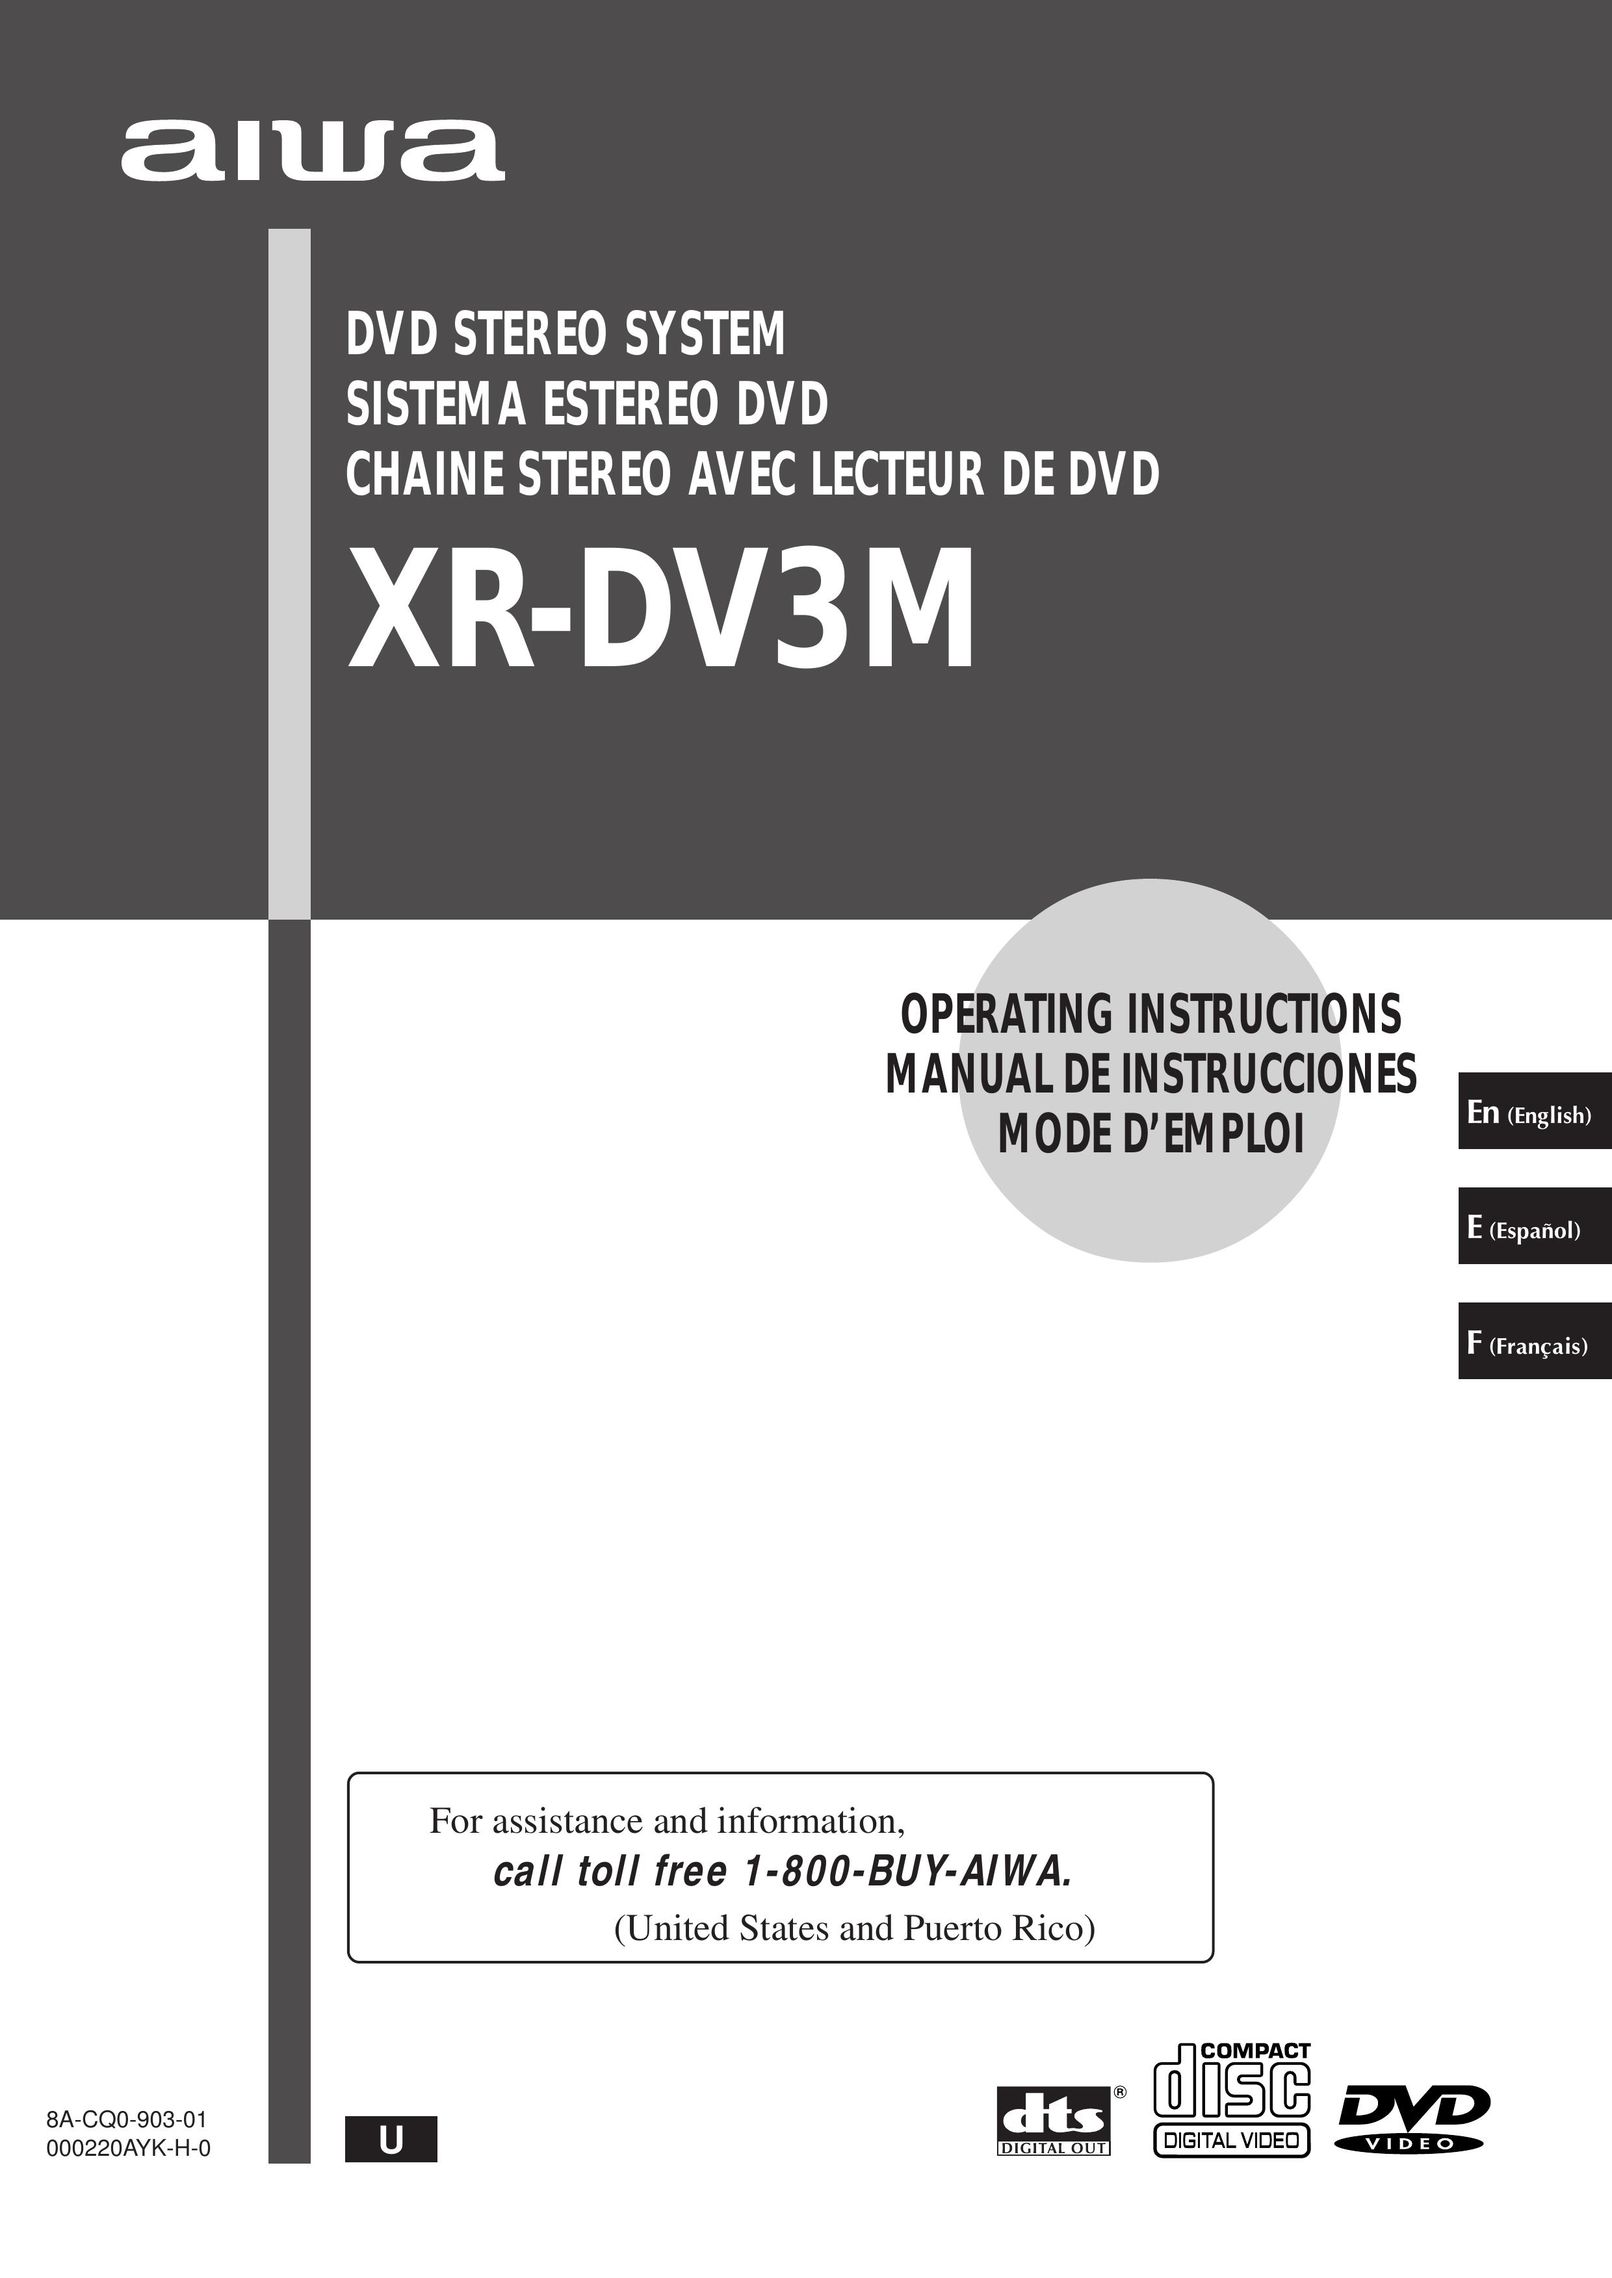 Aiwa XR-DV3M DVD Player User Manual